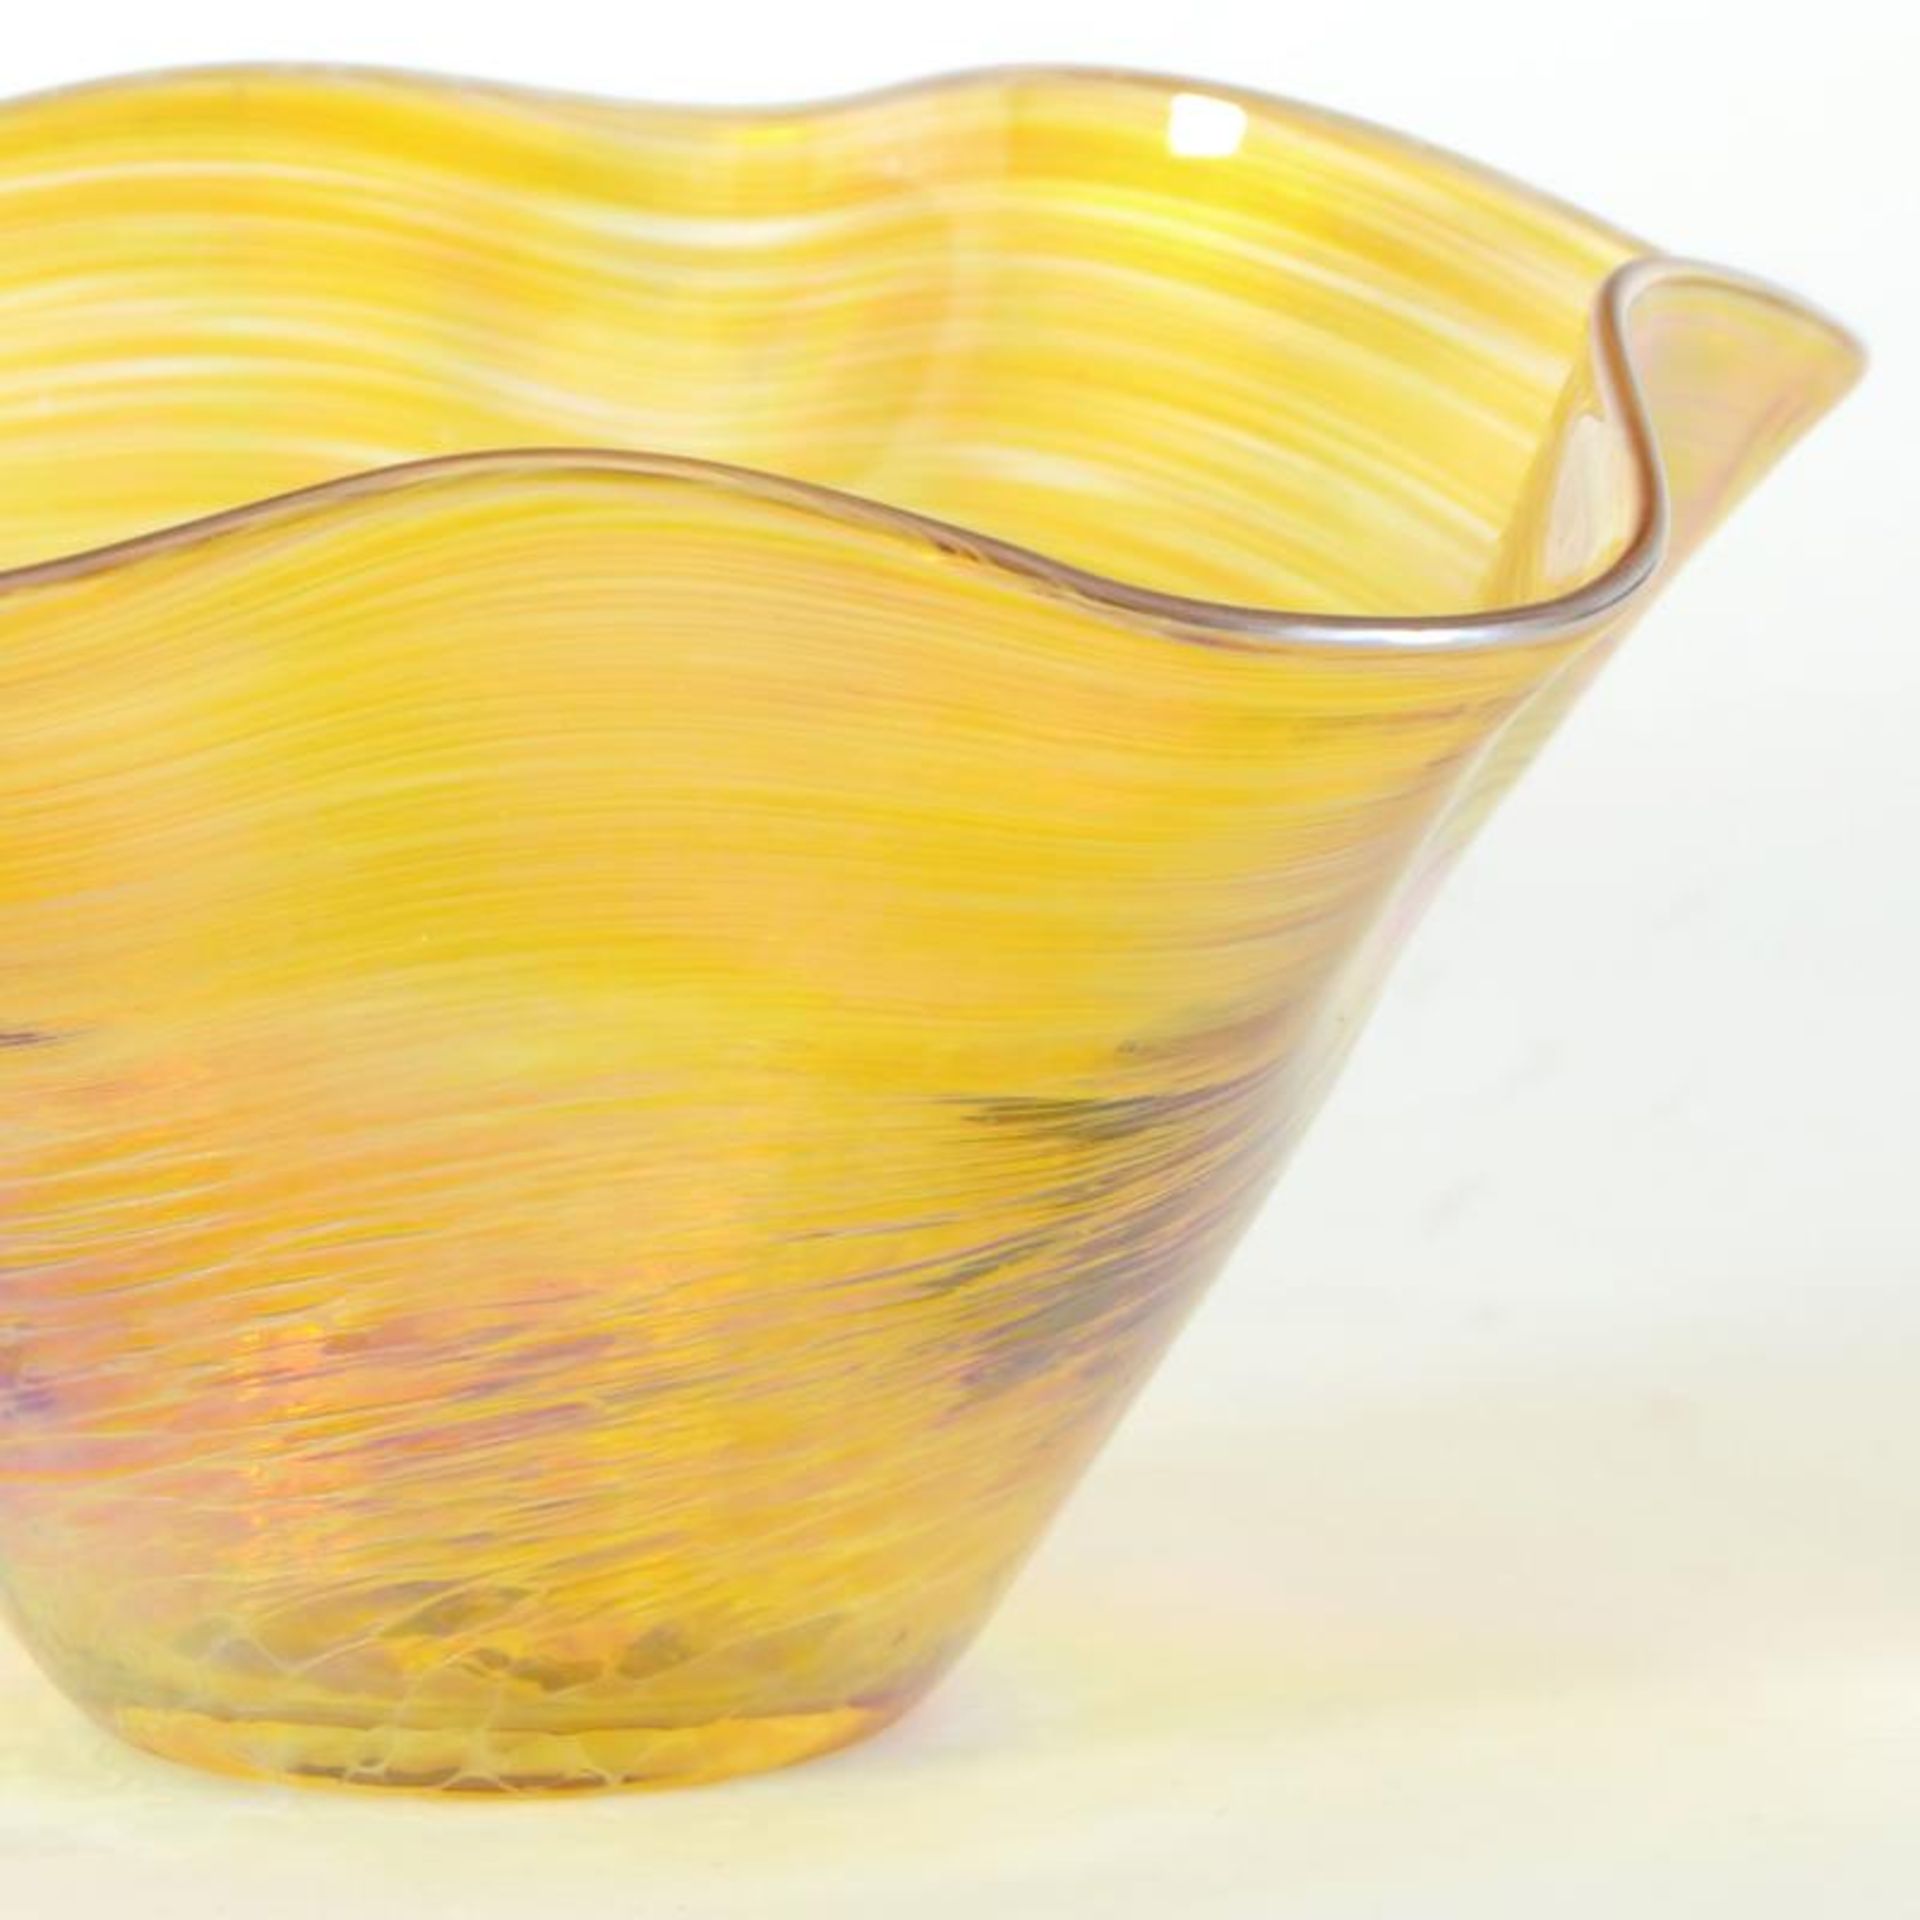 Mini Wave Bowl (Gold) by Glass Eye Studio - Image 2 of 2